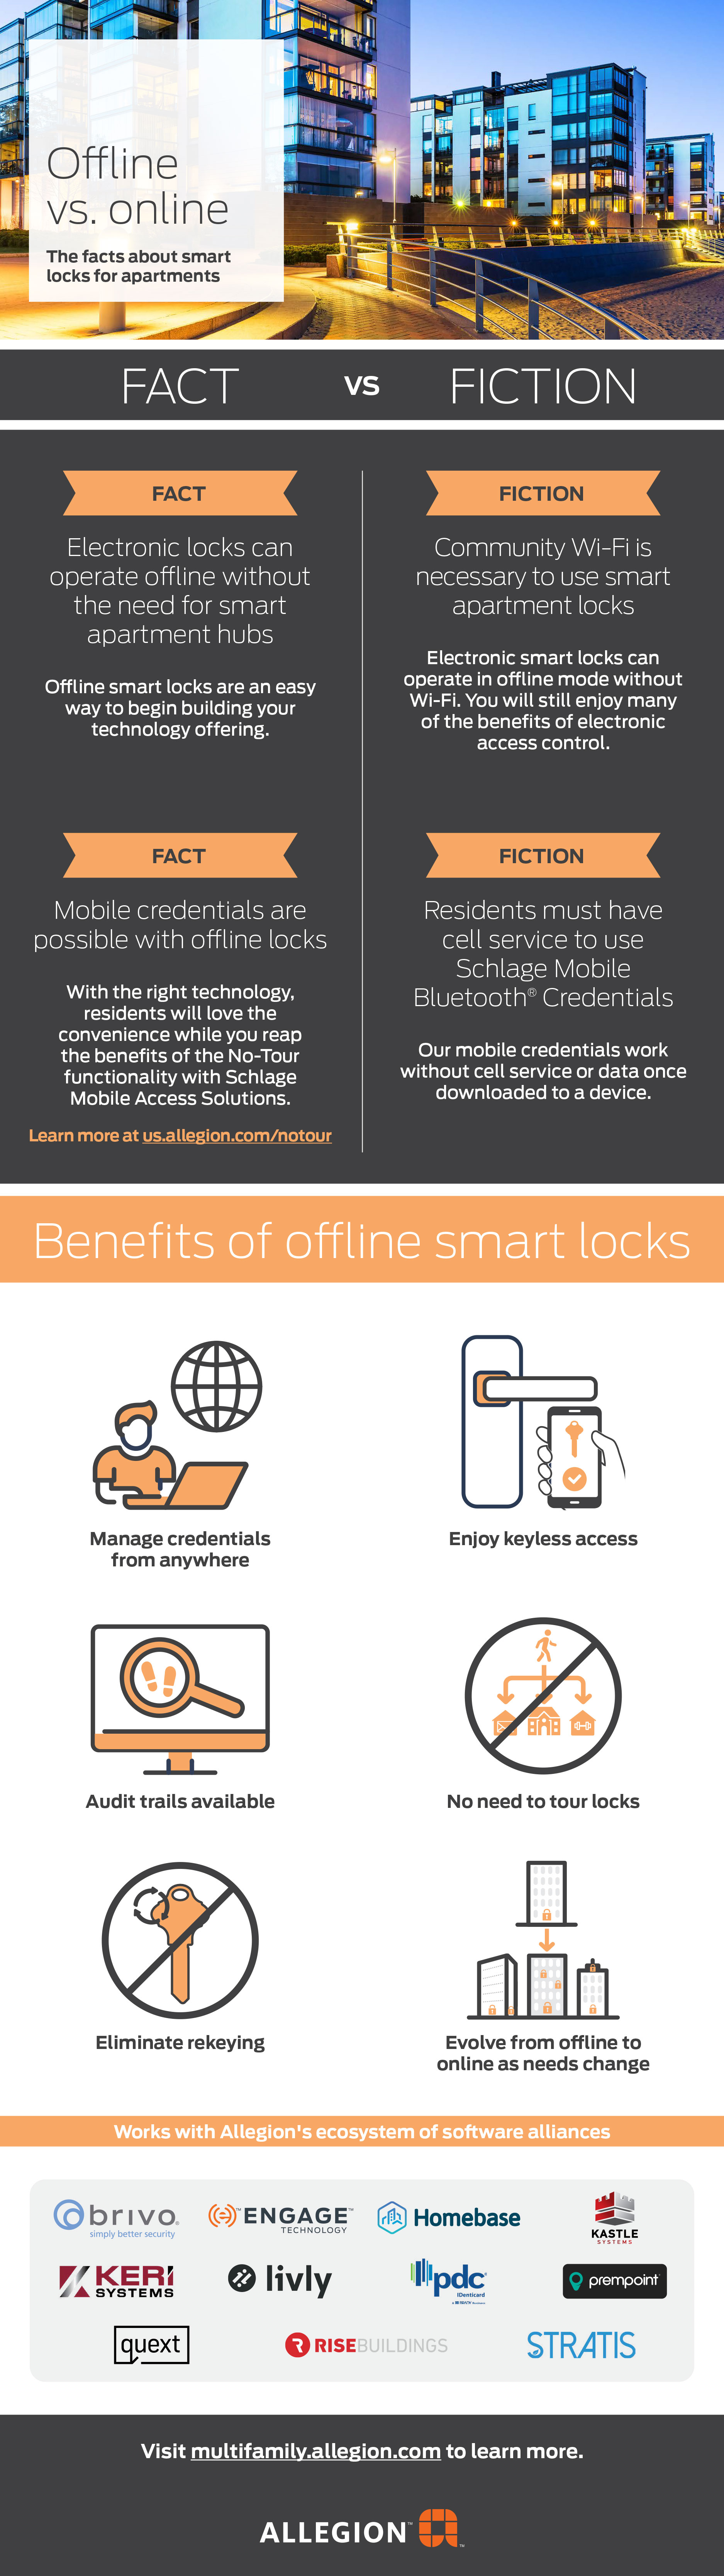 Infographic explaining benefits of offline electronic smart locks for multifamily properties.